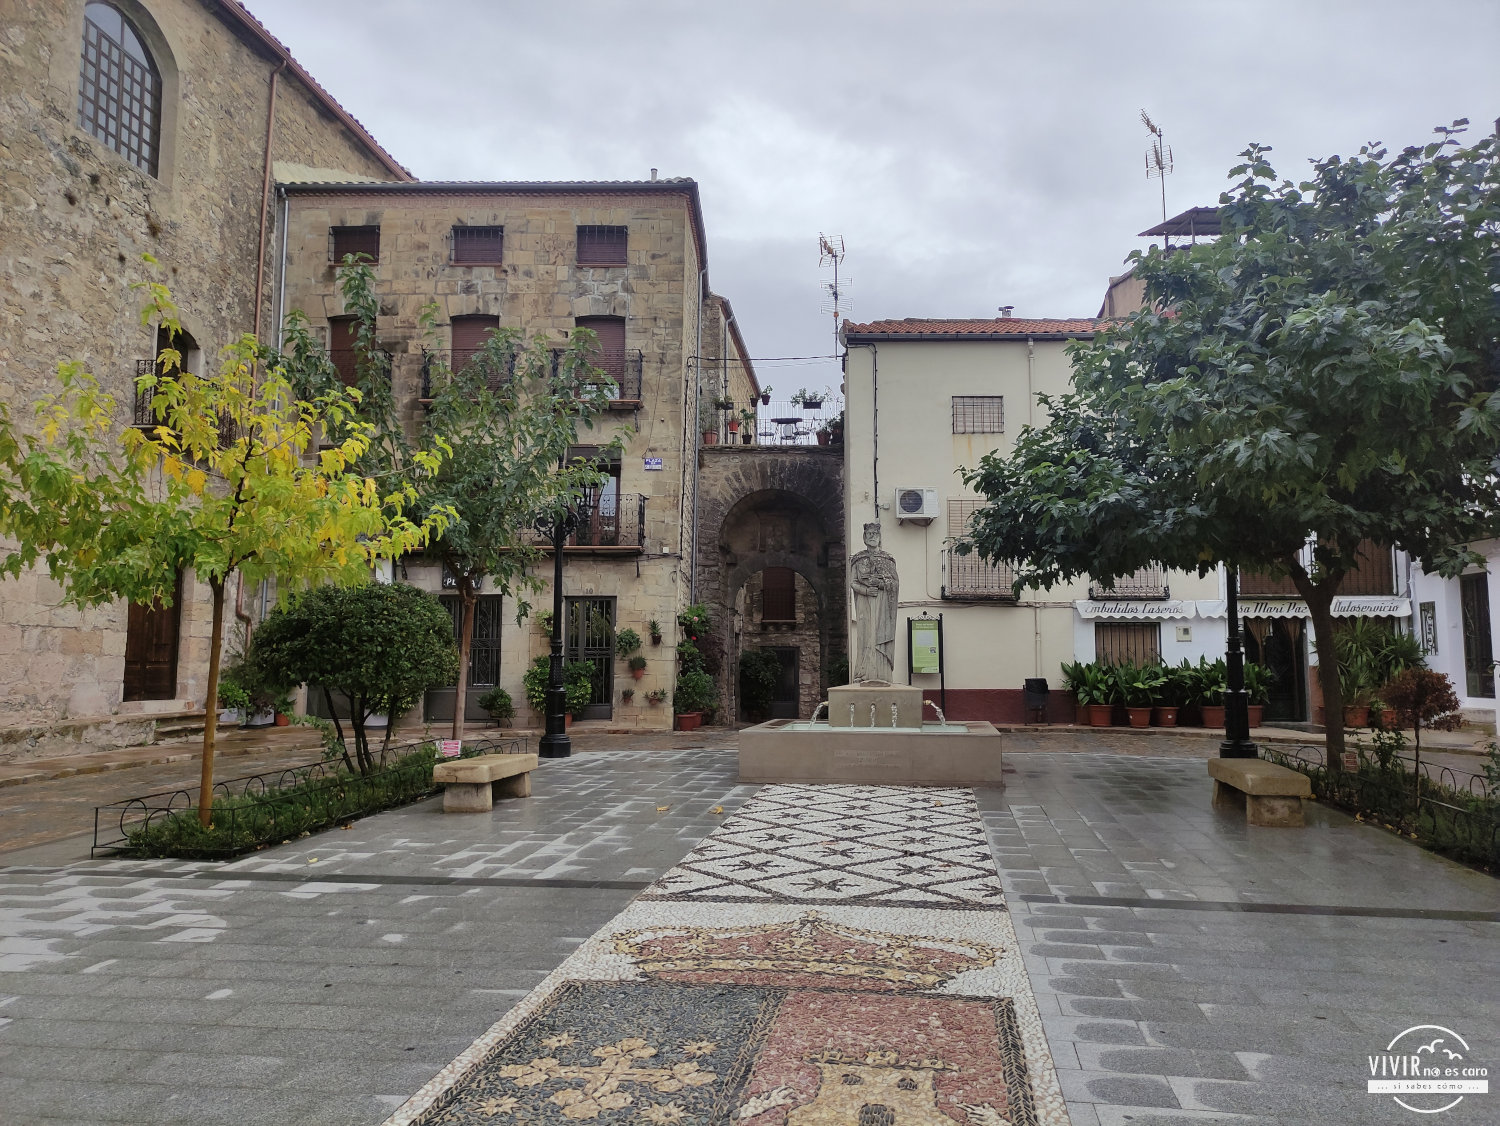 La Plaza de San Fernando en Iznatoraf (Jaén)